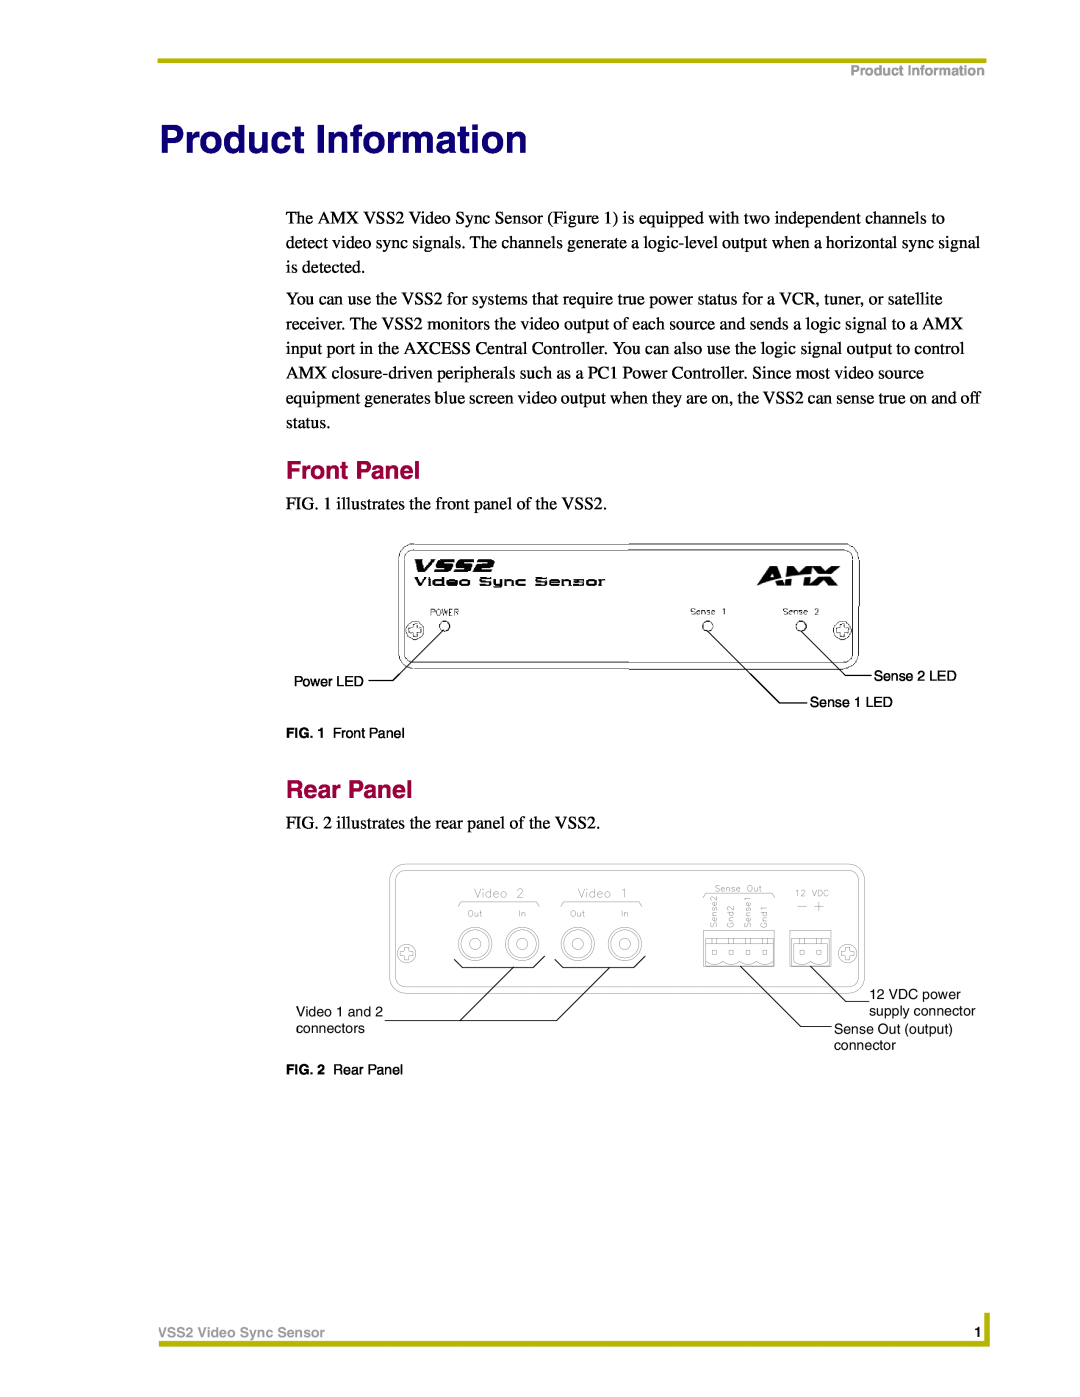 AMX VSS2 instruction manual Product Information, Front Panel, Rear Panel 